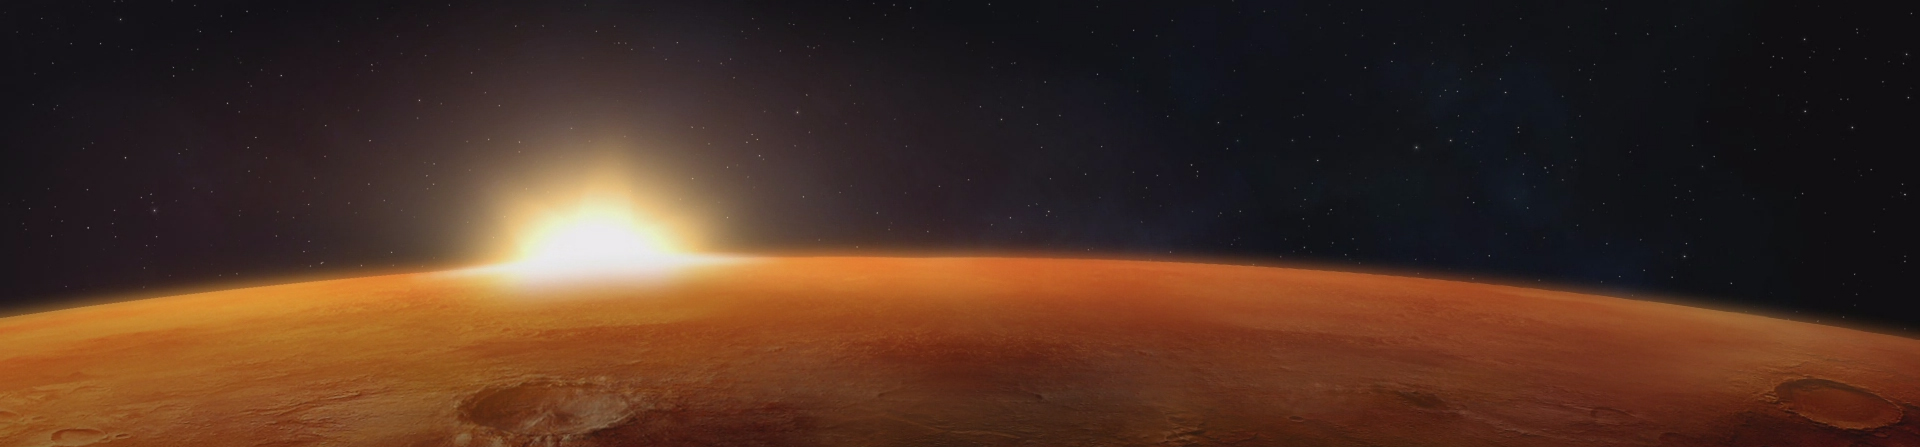 Surviving Mars. Image Credit: Haemimont Games